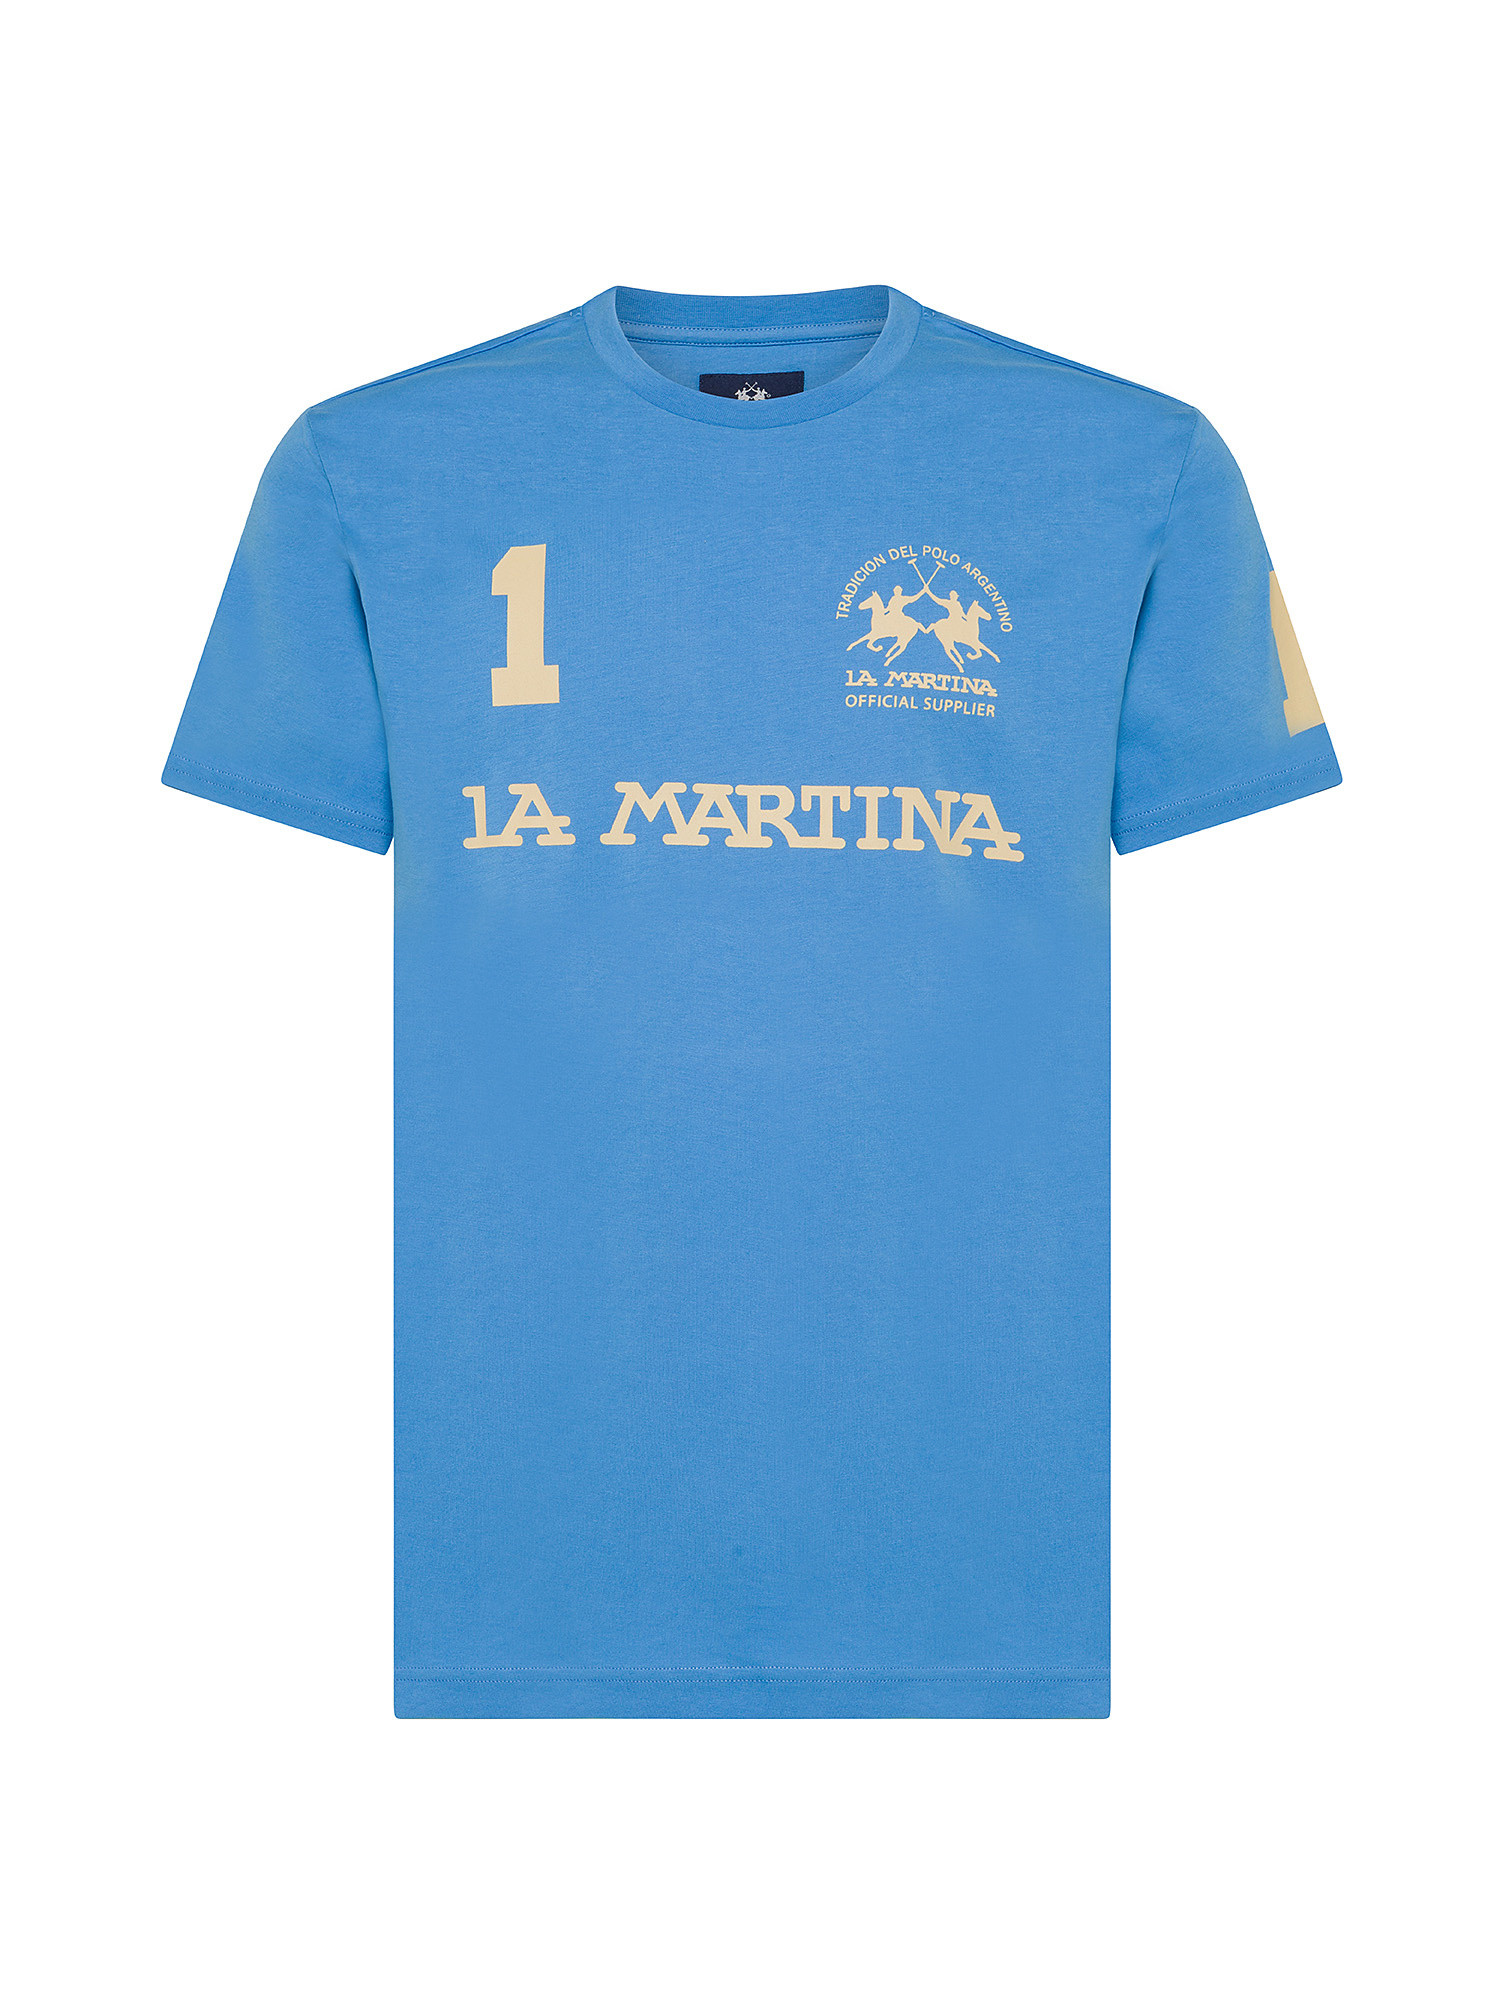 La Martina - Short-sleeved T-shirt in jersey cotton, Blue, large image number 0